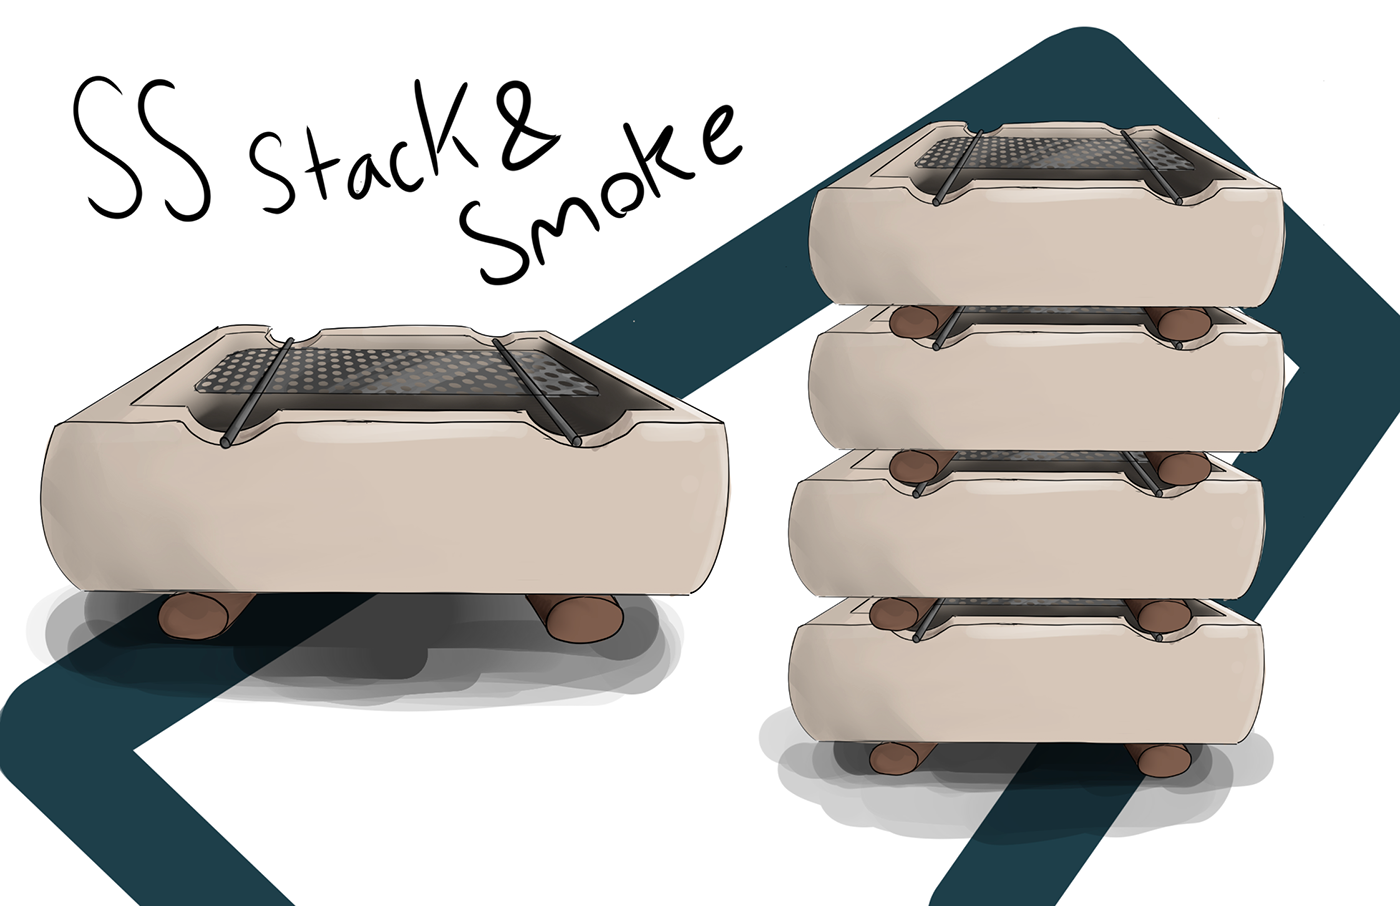 concrete craft grill homegoods model product design  sketch